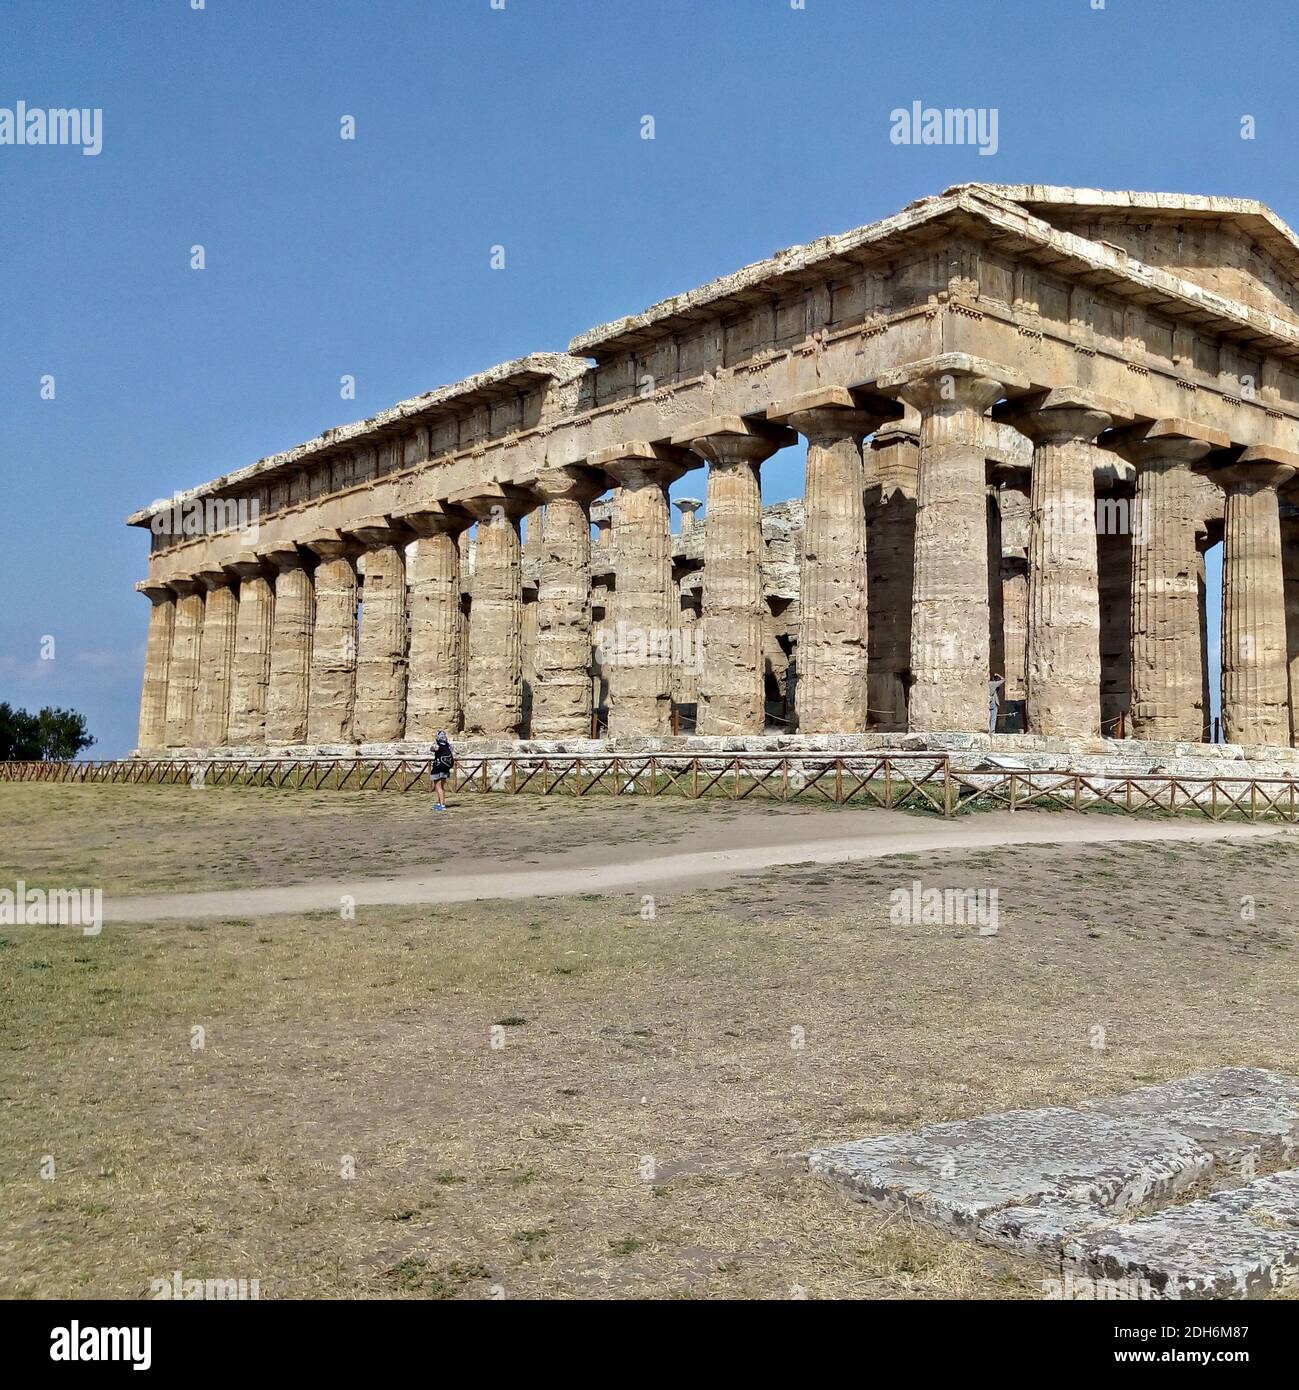 Second Temple of Hera in Paestum, Campania, Italy Stock Photo